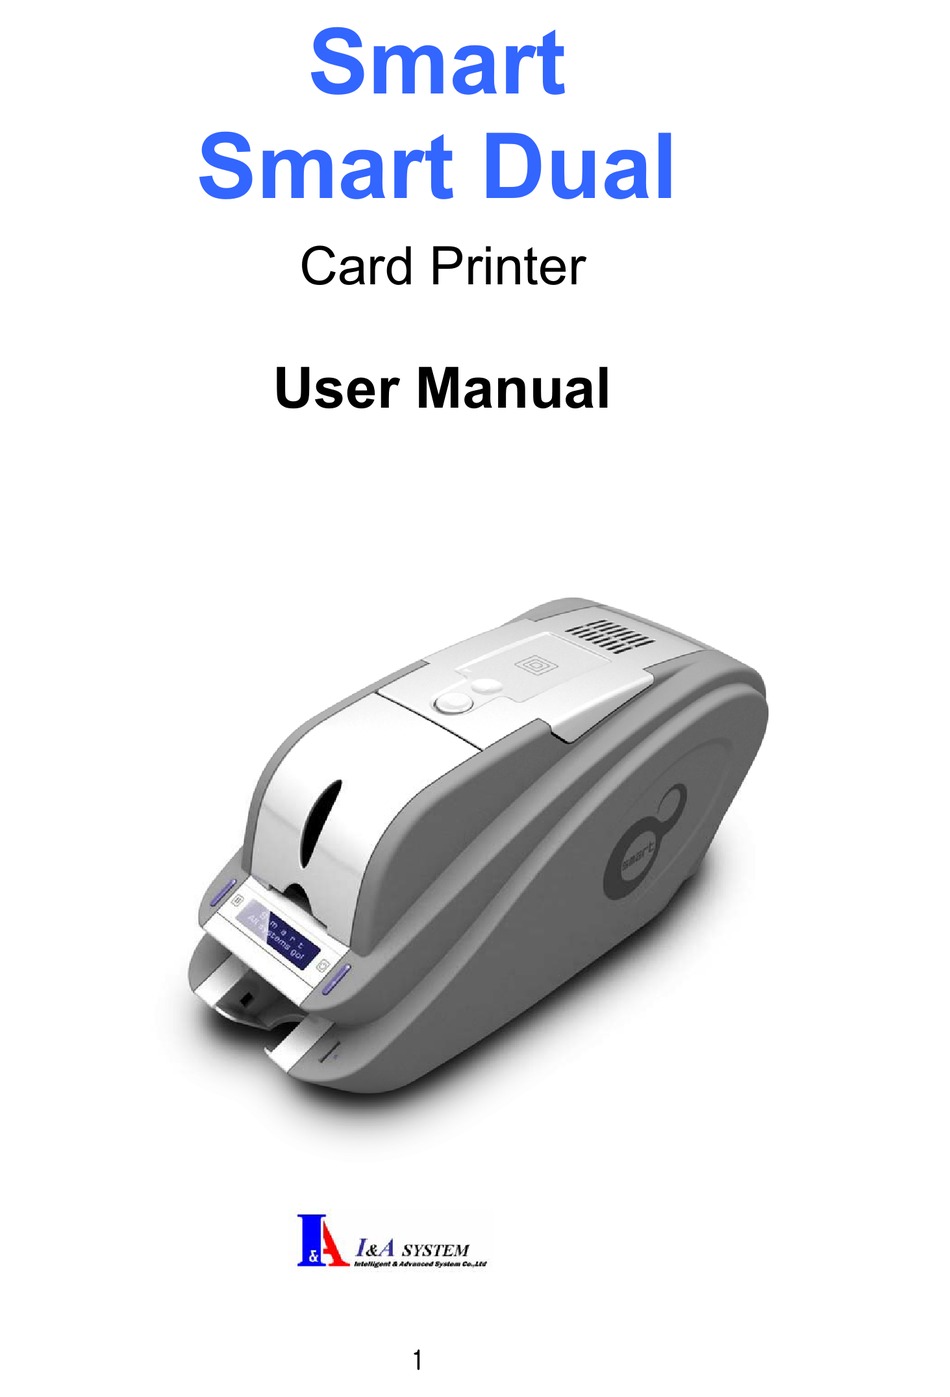 Download printer driver hp laserjet 1020